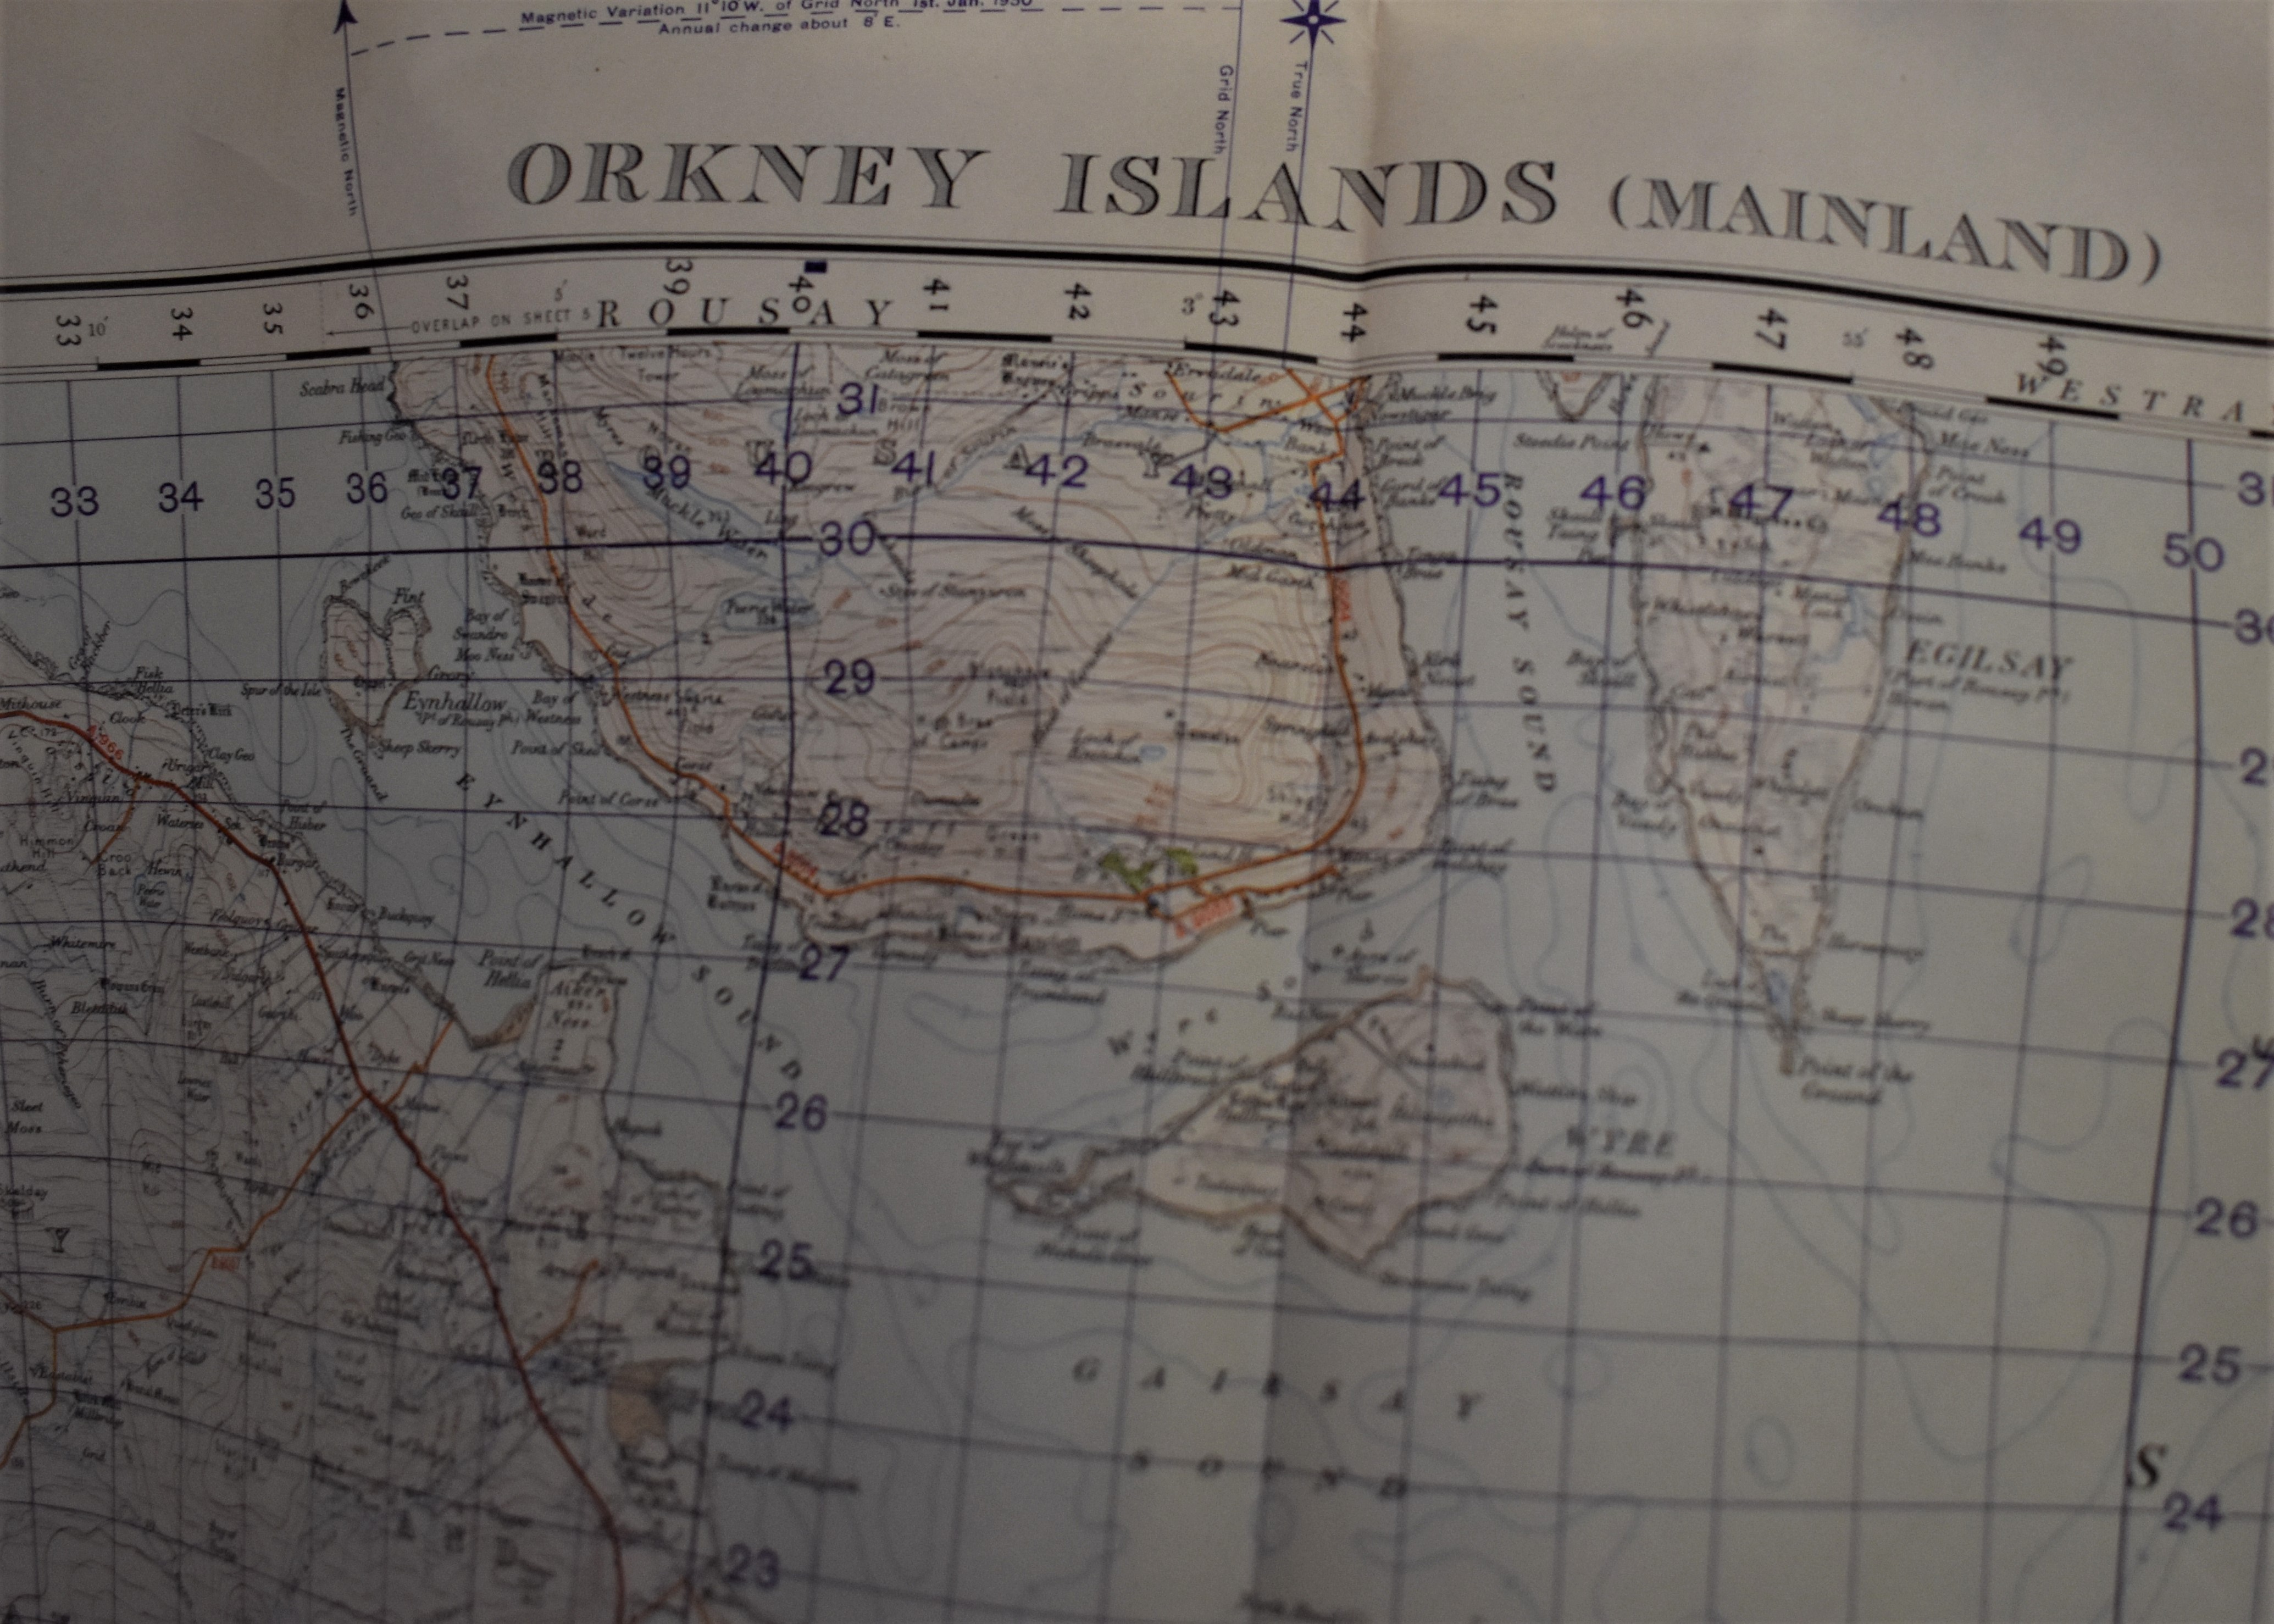 Scotland War Office Edition, Orkney Island (Mainland) - sheet 6. Ordnance survey map - published - Image 2 of 2